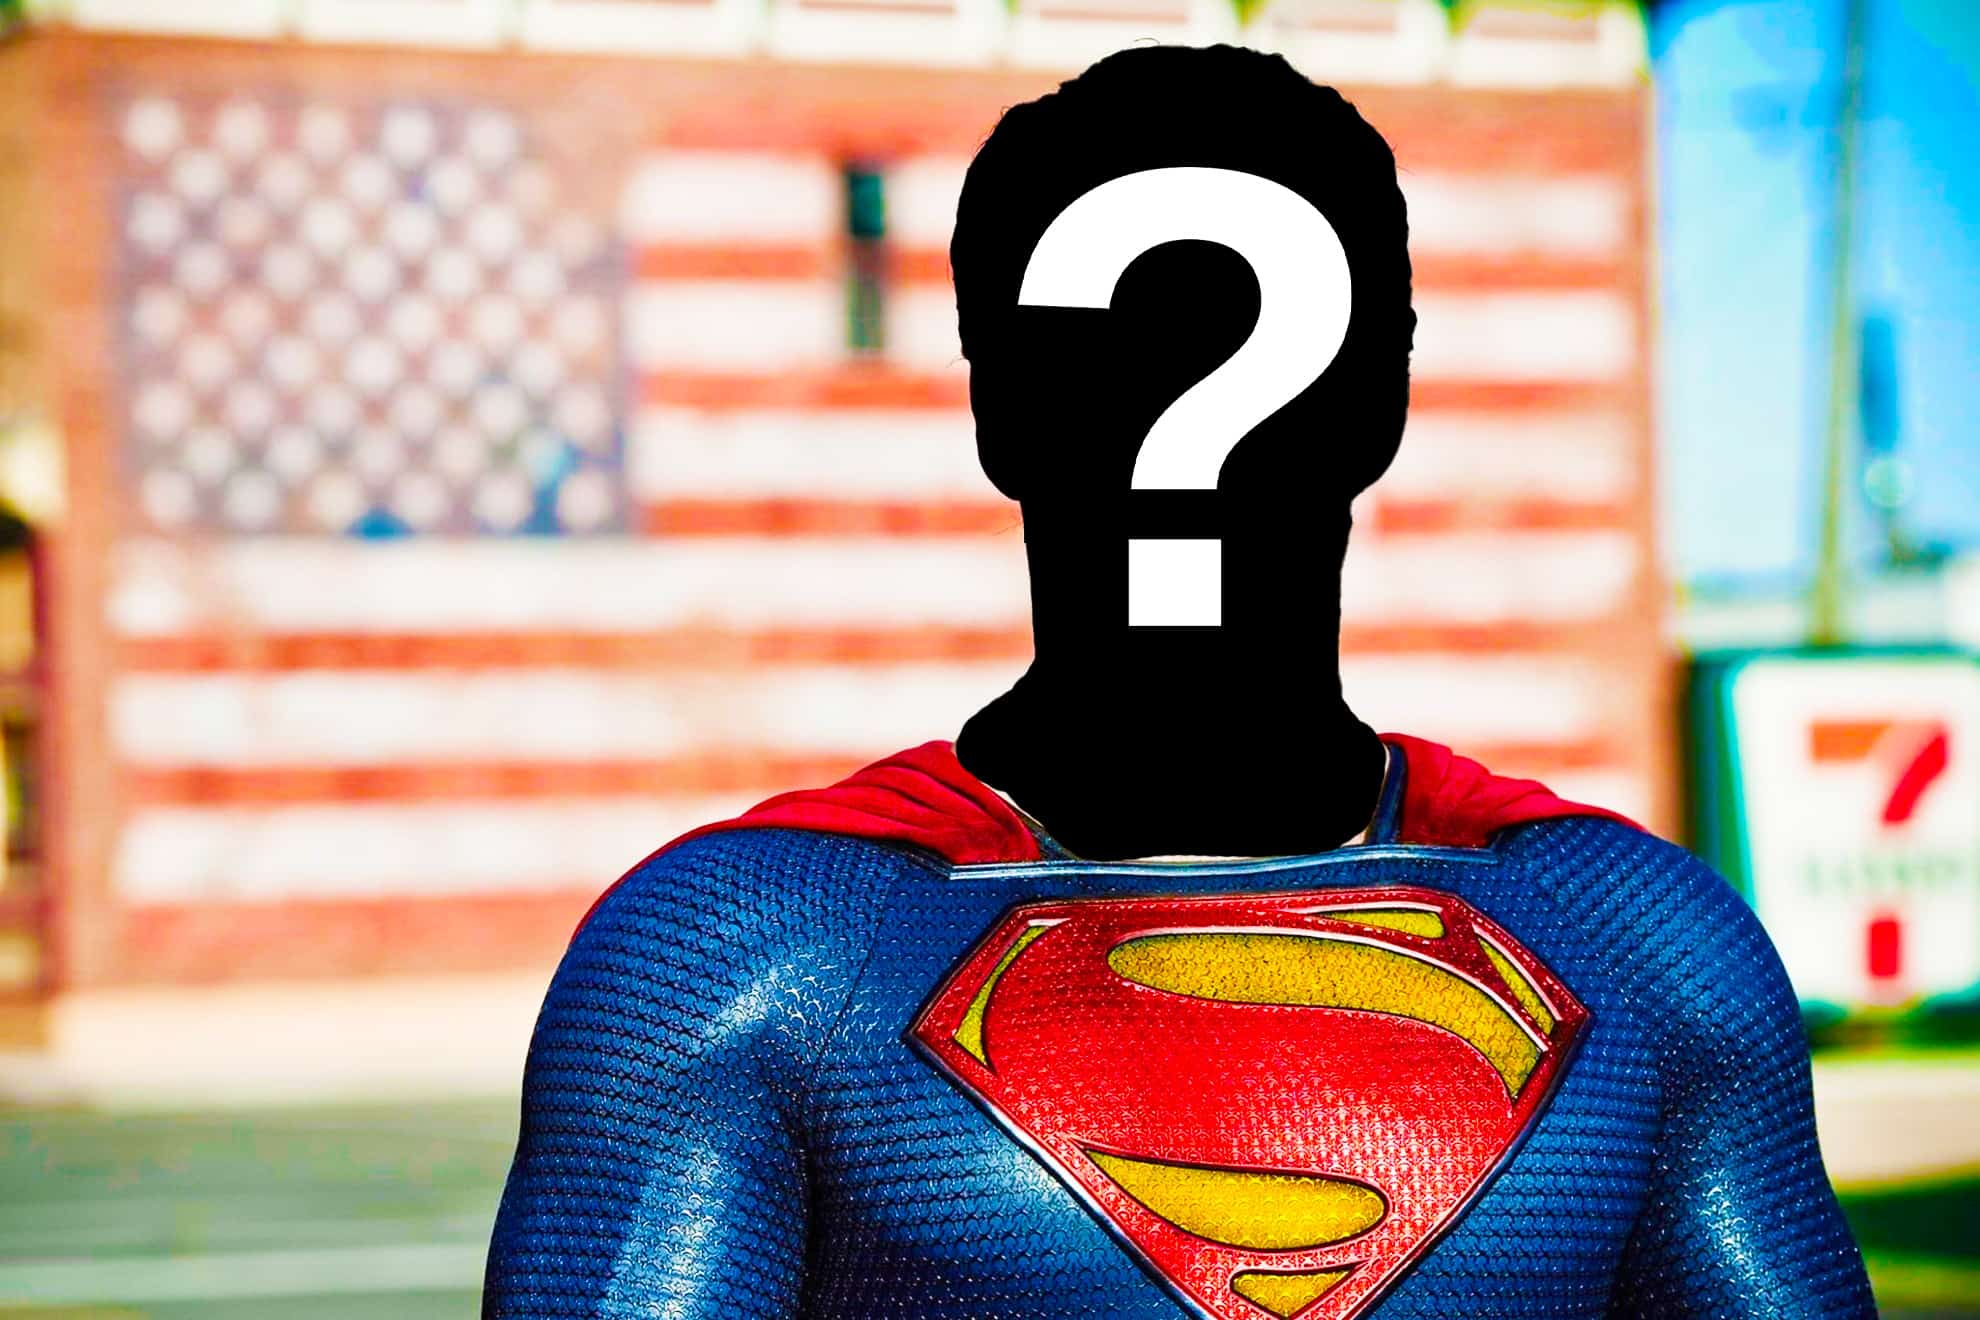 Despite rumors, Henry Cavill has not returned as Superman - Daily Planet